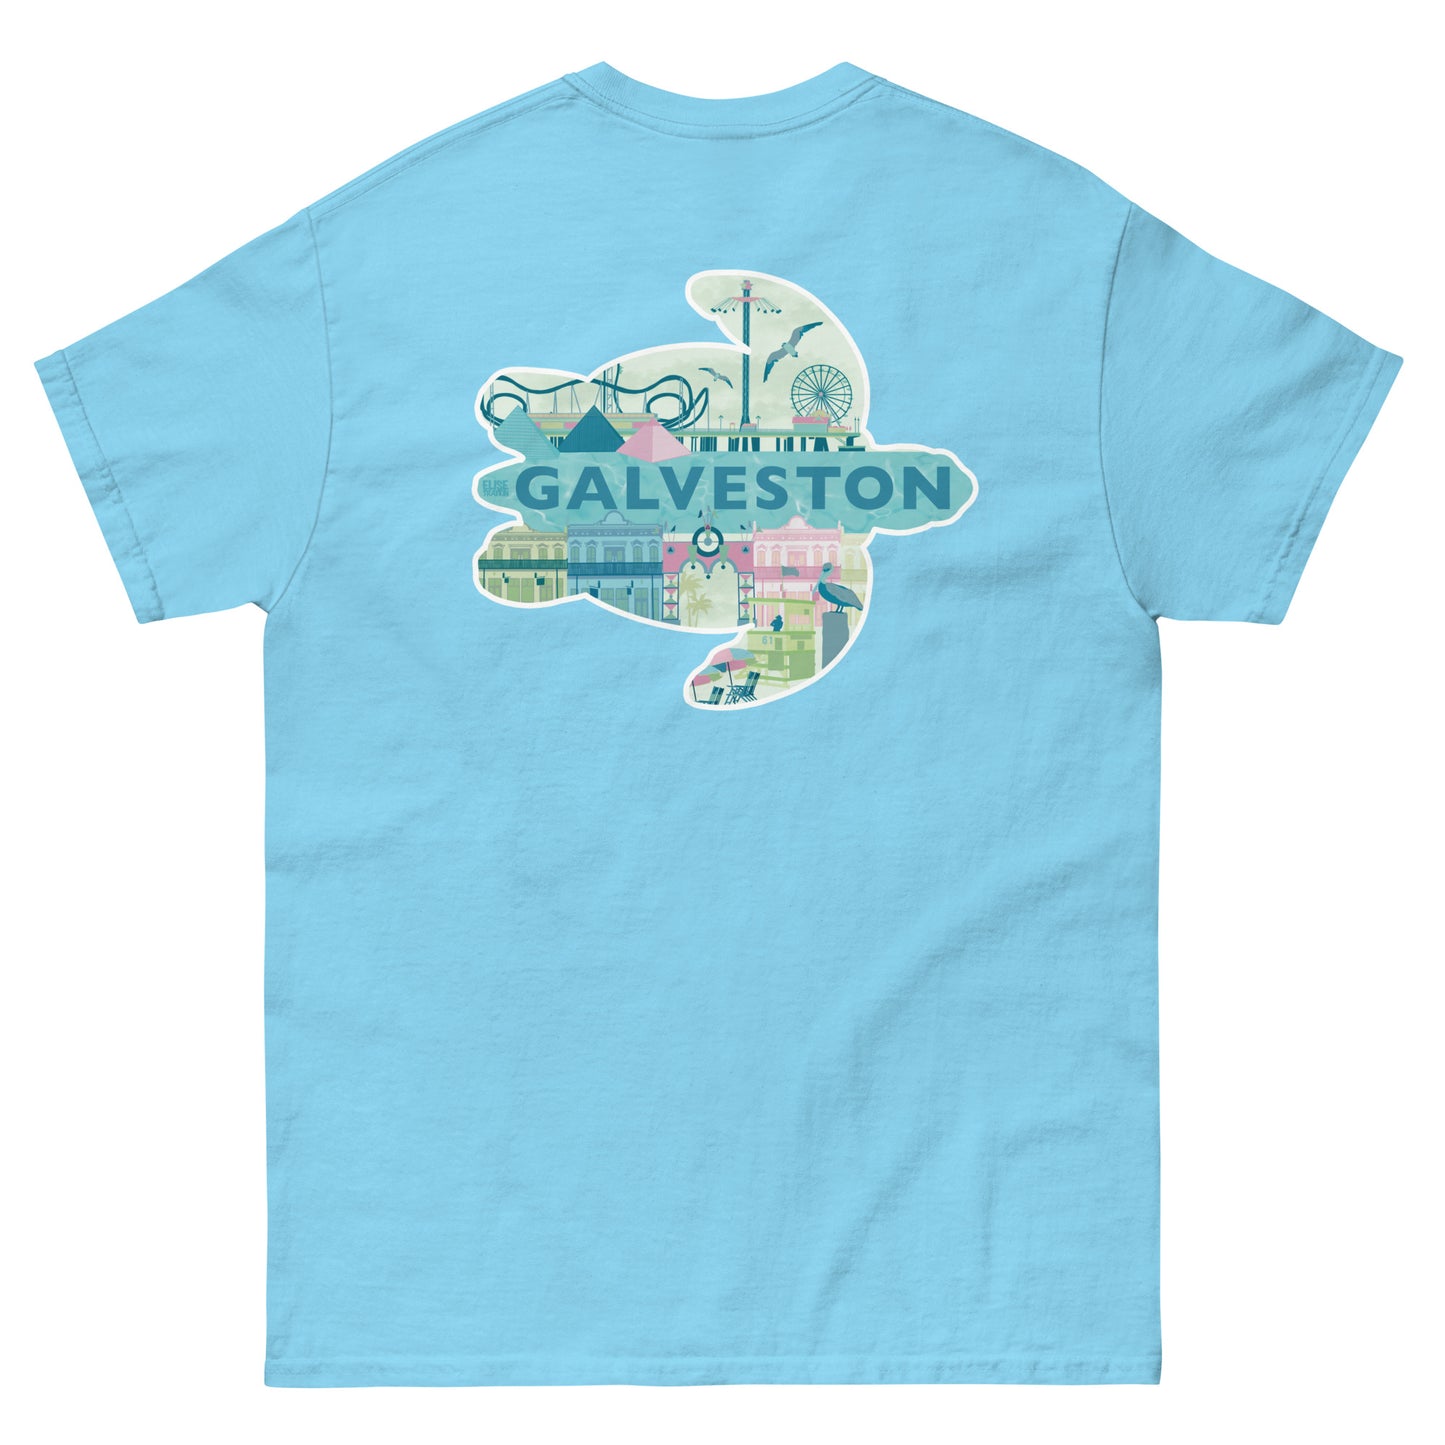 Galveston Turtle T-Shirt - *Made to Order*